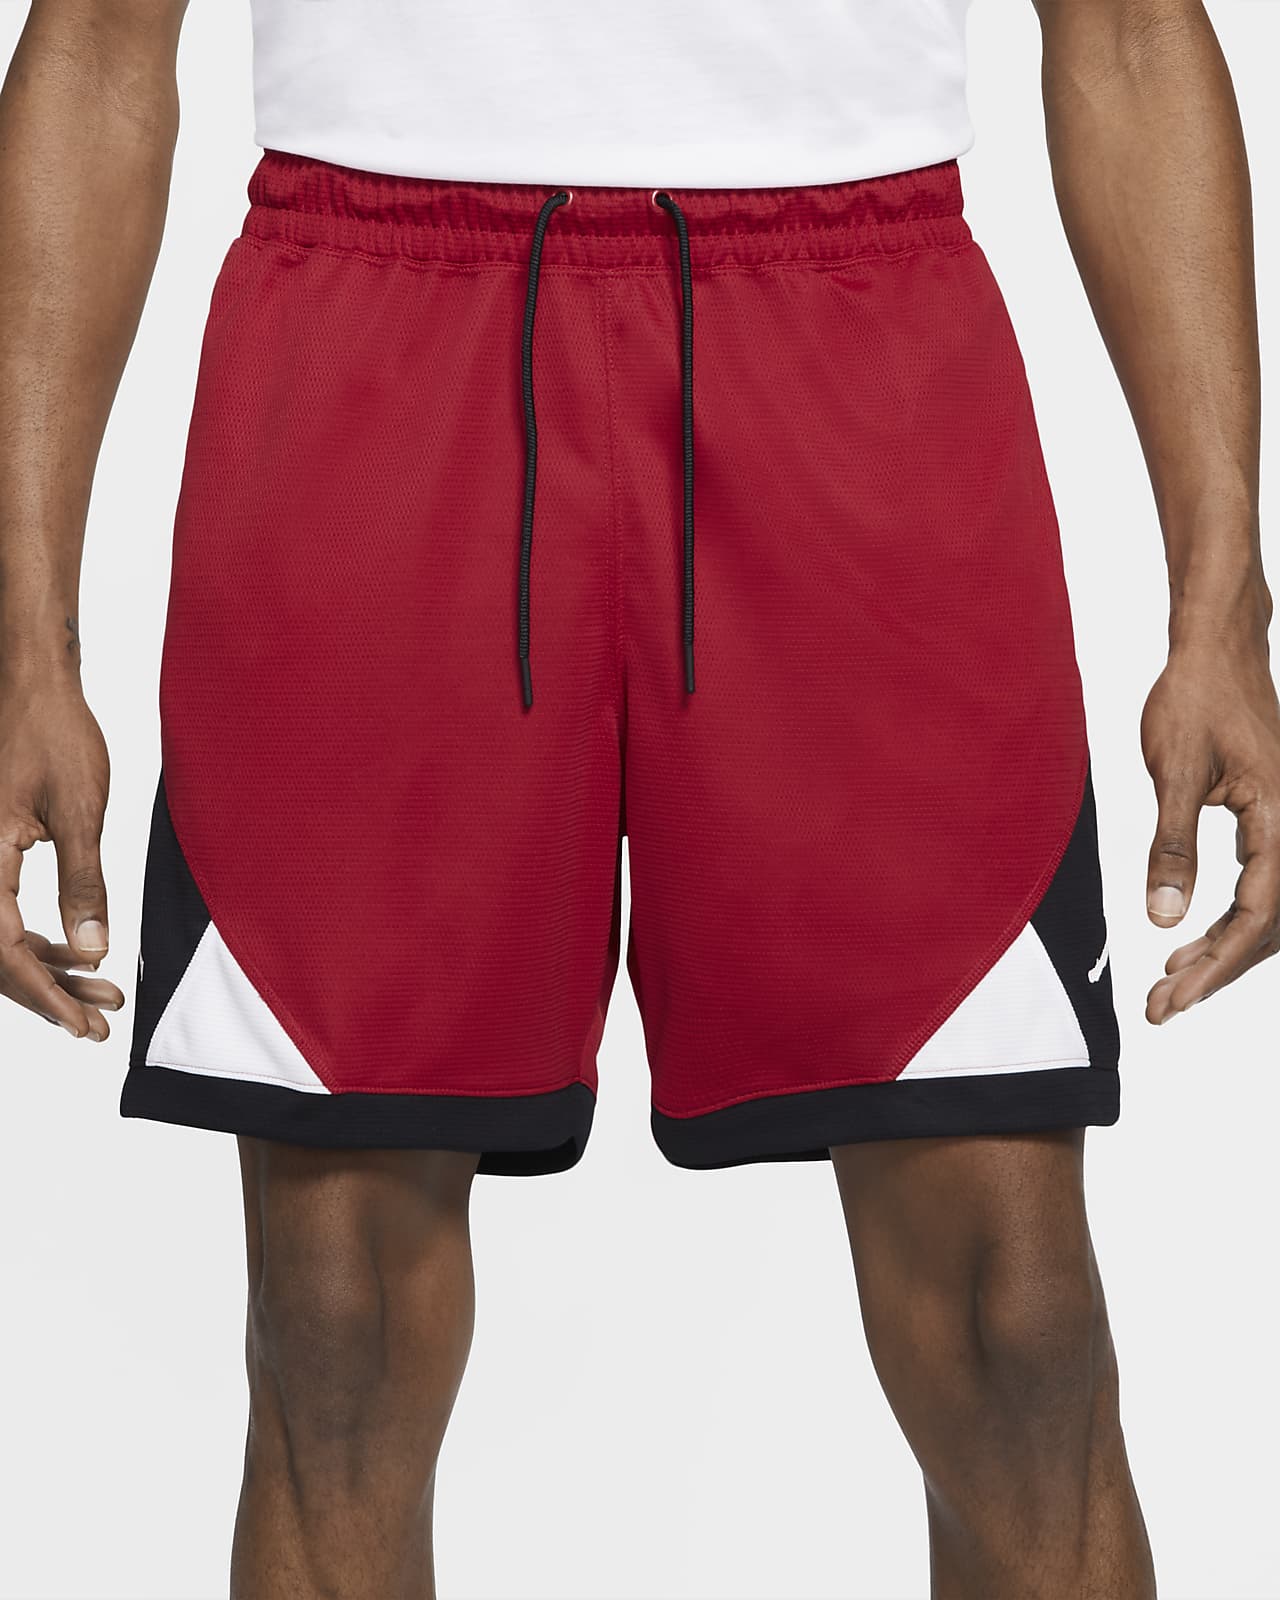 Buy > nike air dri fit shorts > in stock